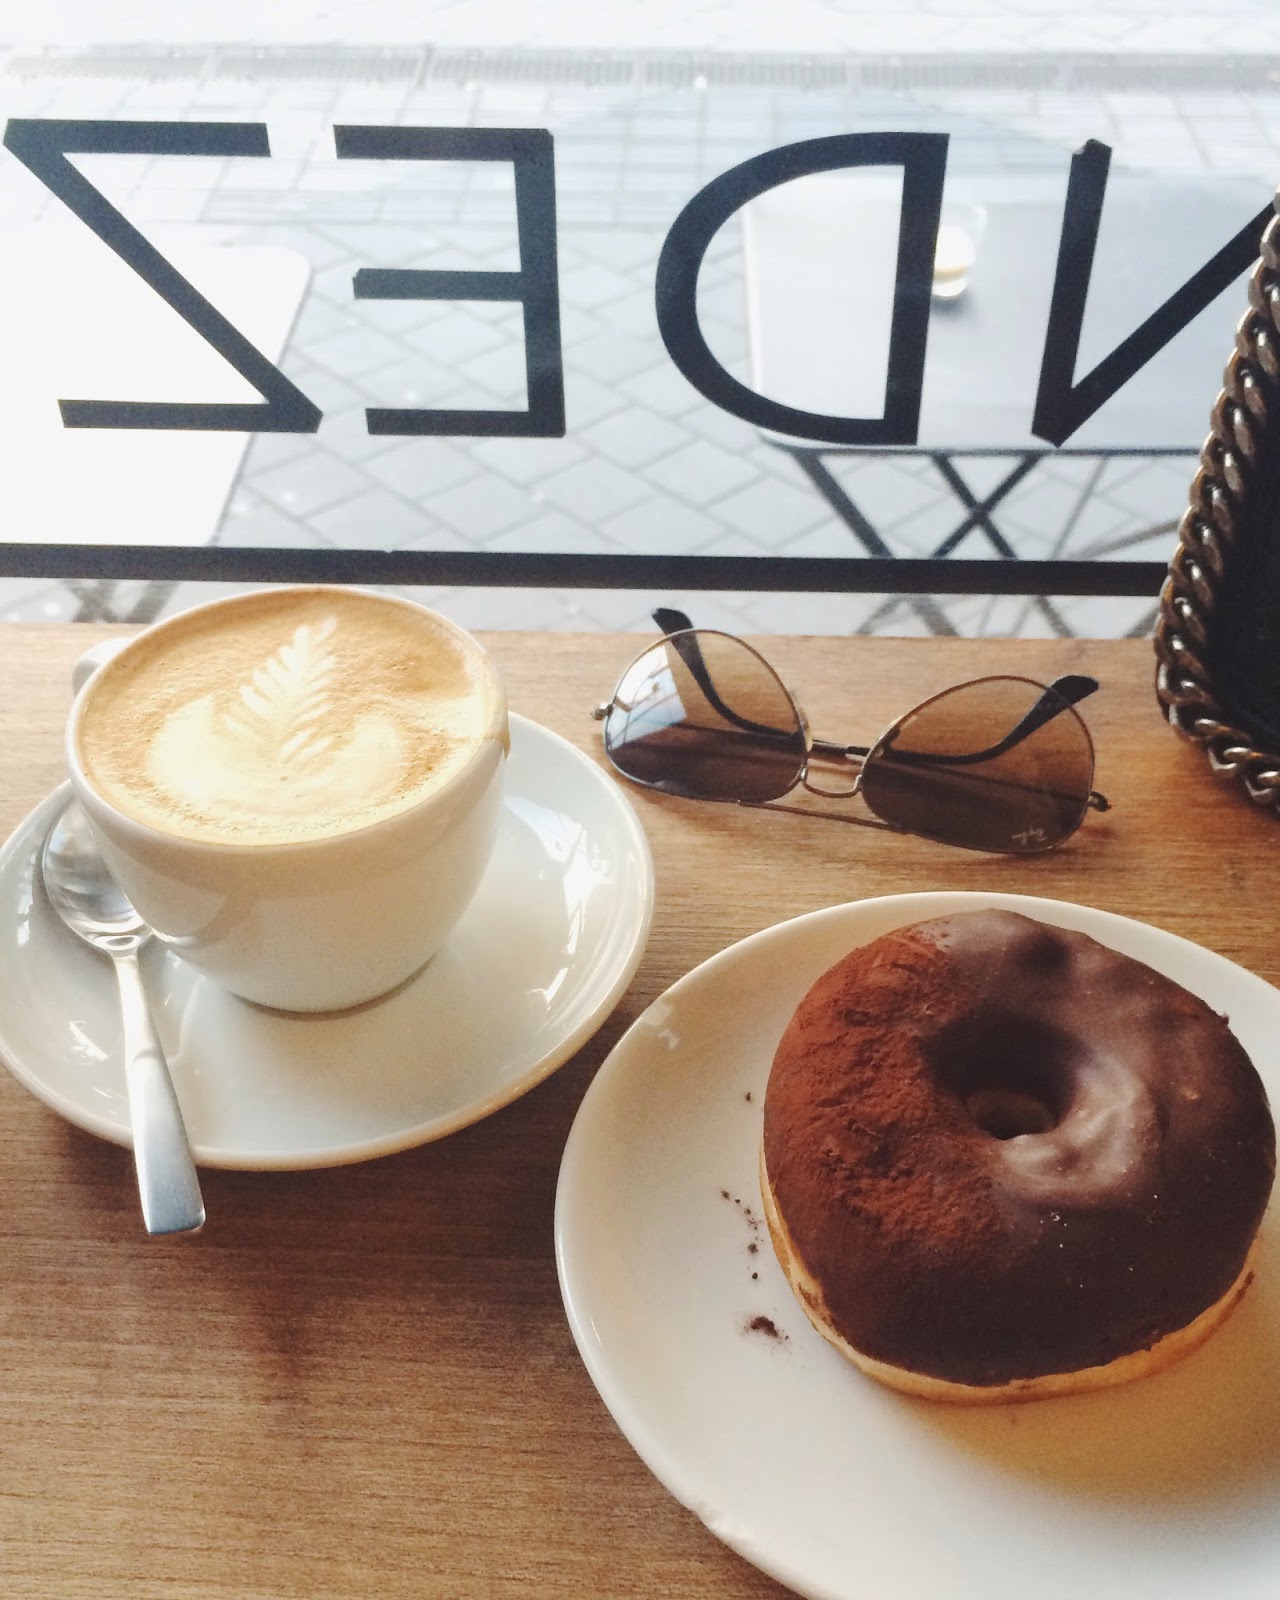 fernandez and wells, doughnut, chocolate doughnut, cappuccino, latte art, london cafe